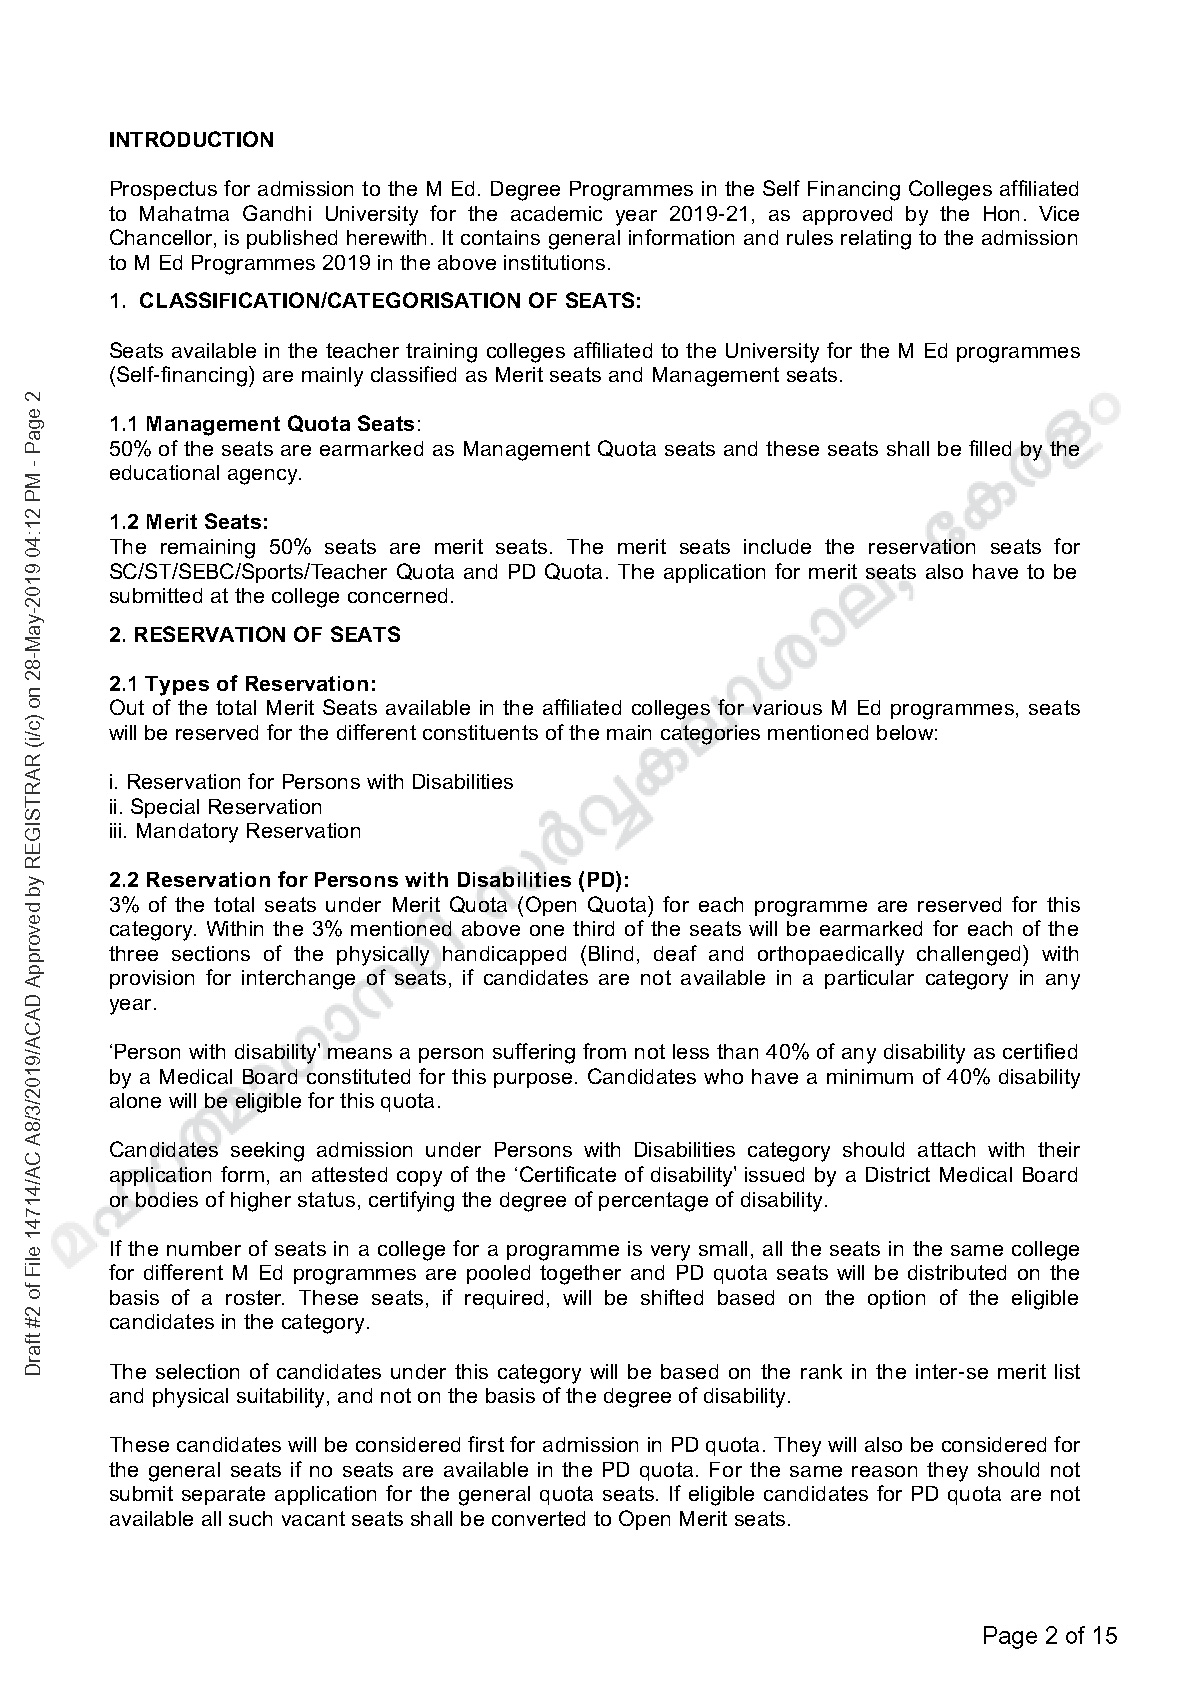 MG University M Ed Prospectus and Application form 2019 2020 - Notification Image 2